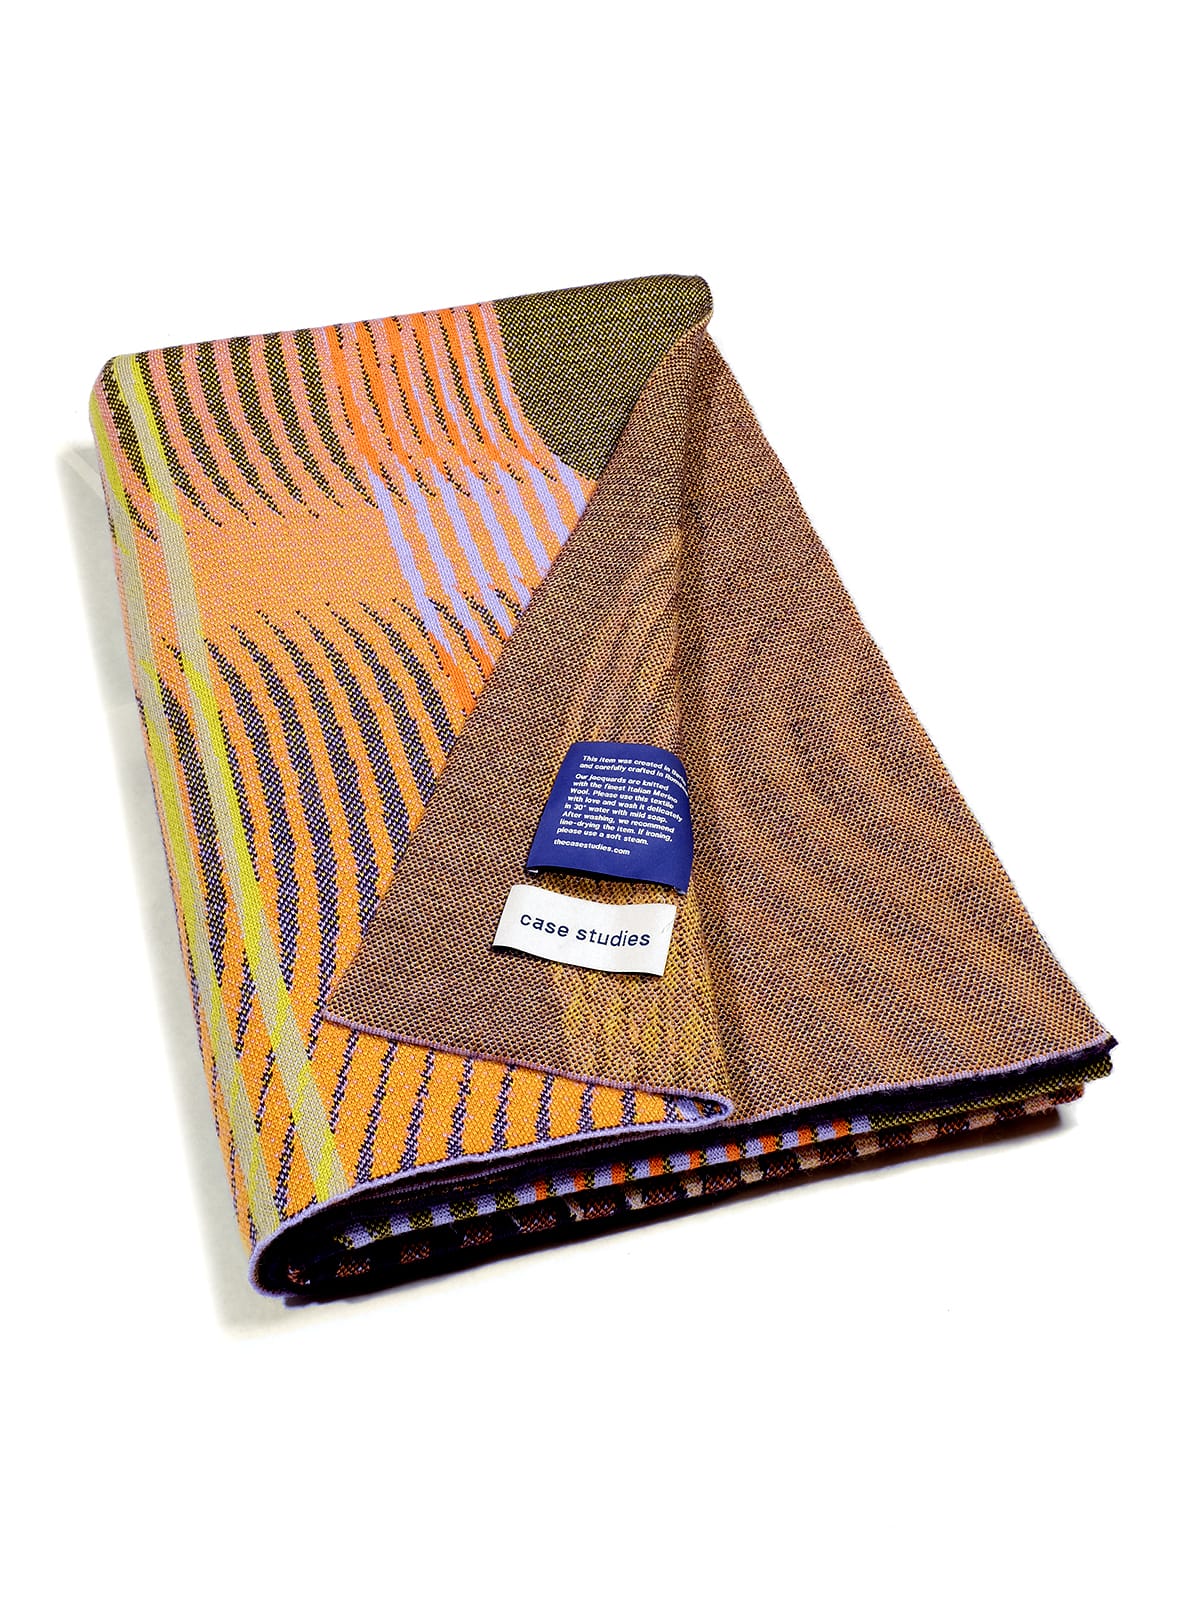 Knitted Blanket Musselshell - Merino Wool folded